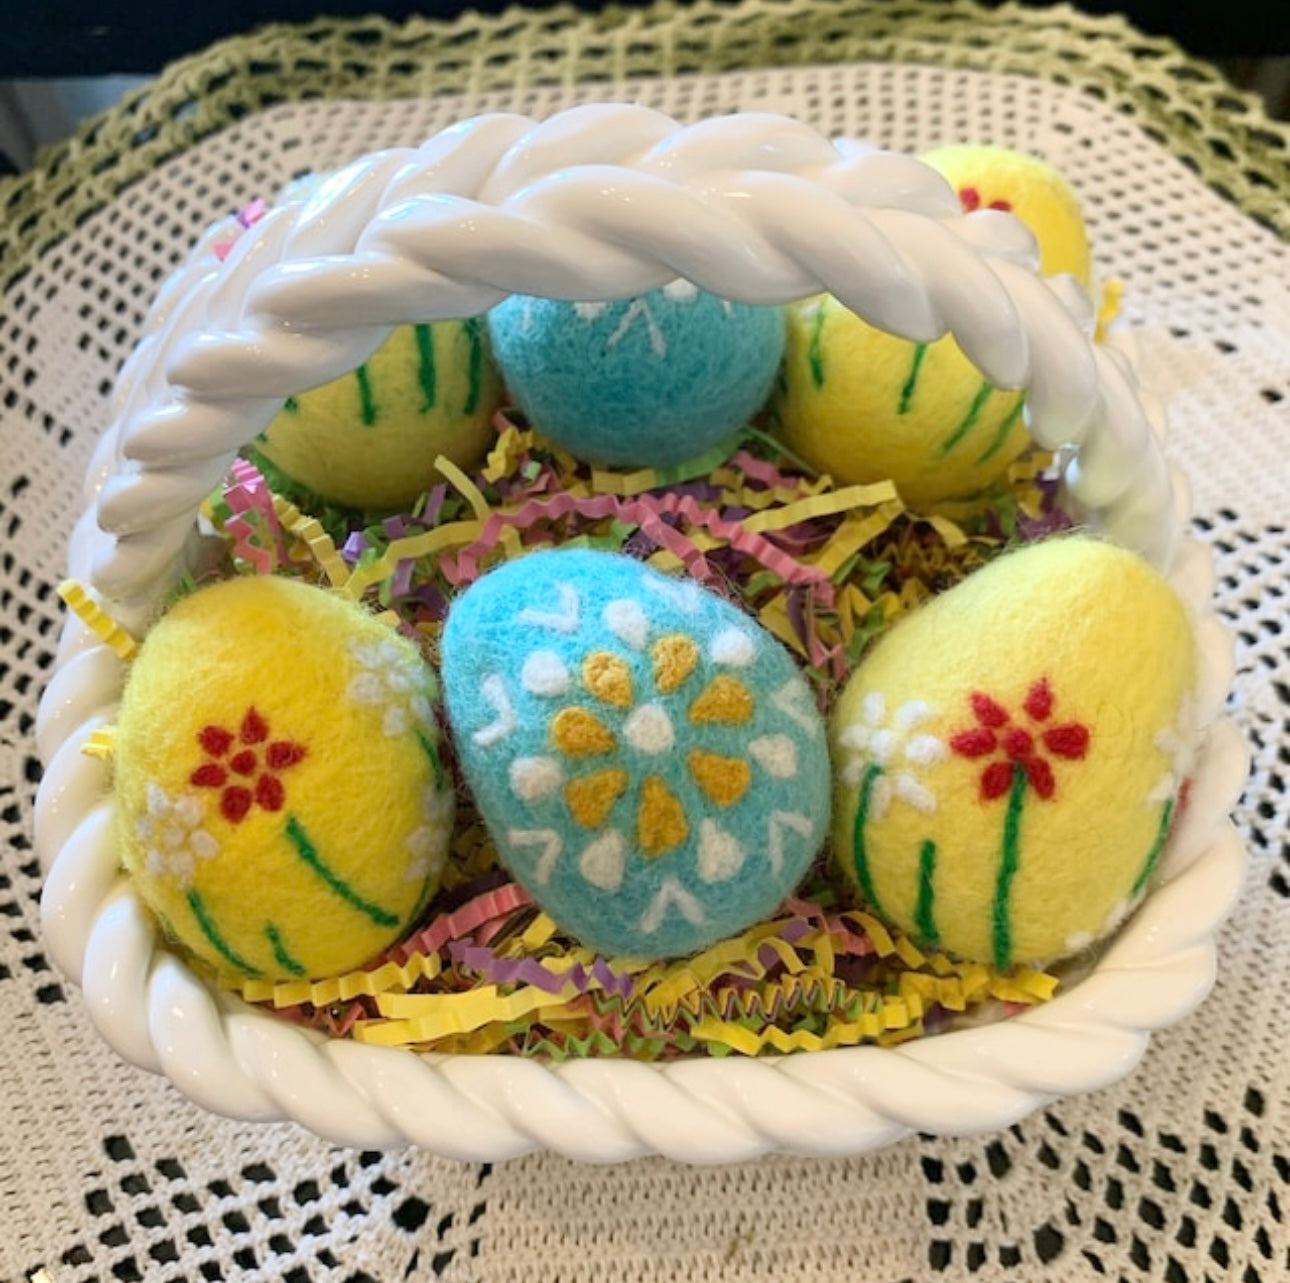 Felted Easter Eggs